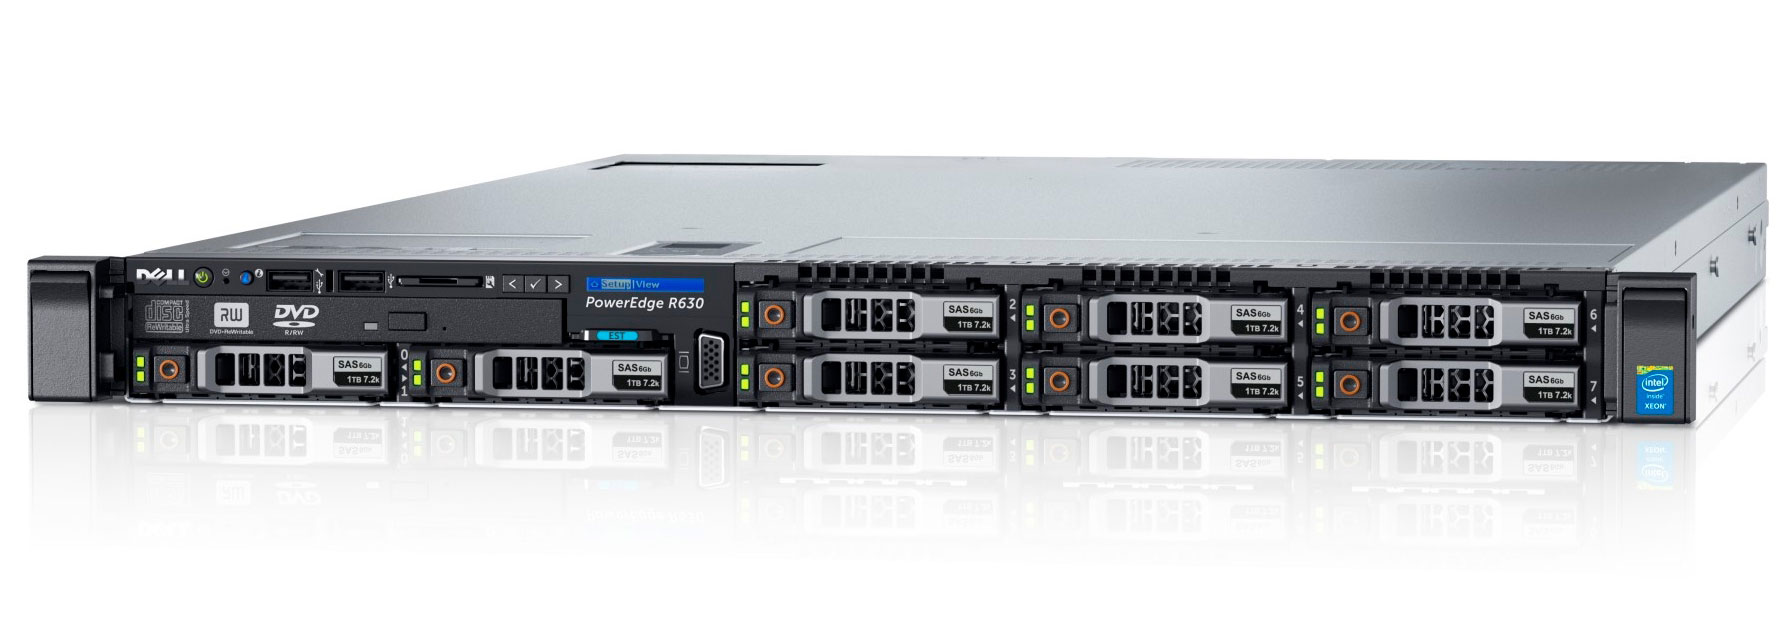 Подробное фото Сервер DELL PowerEdge R630 Xeon 2x E5-2696v4 256Gb 2133P DDR4 8x noHDD 2.5", SAS RAID Perc H730, 1024Mb, DVD, 2*PSU